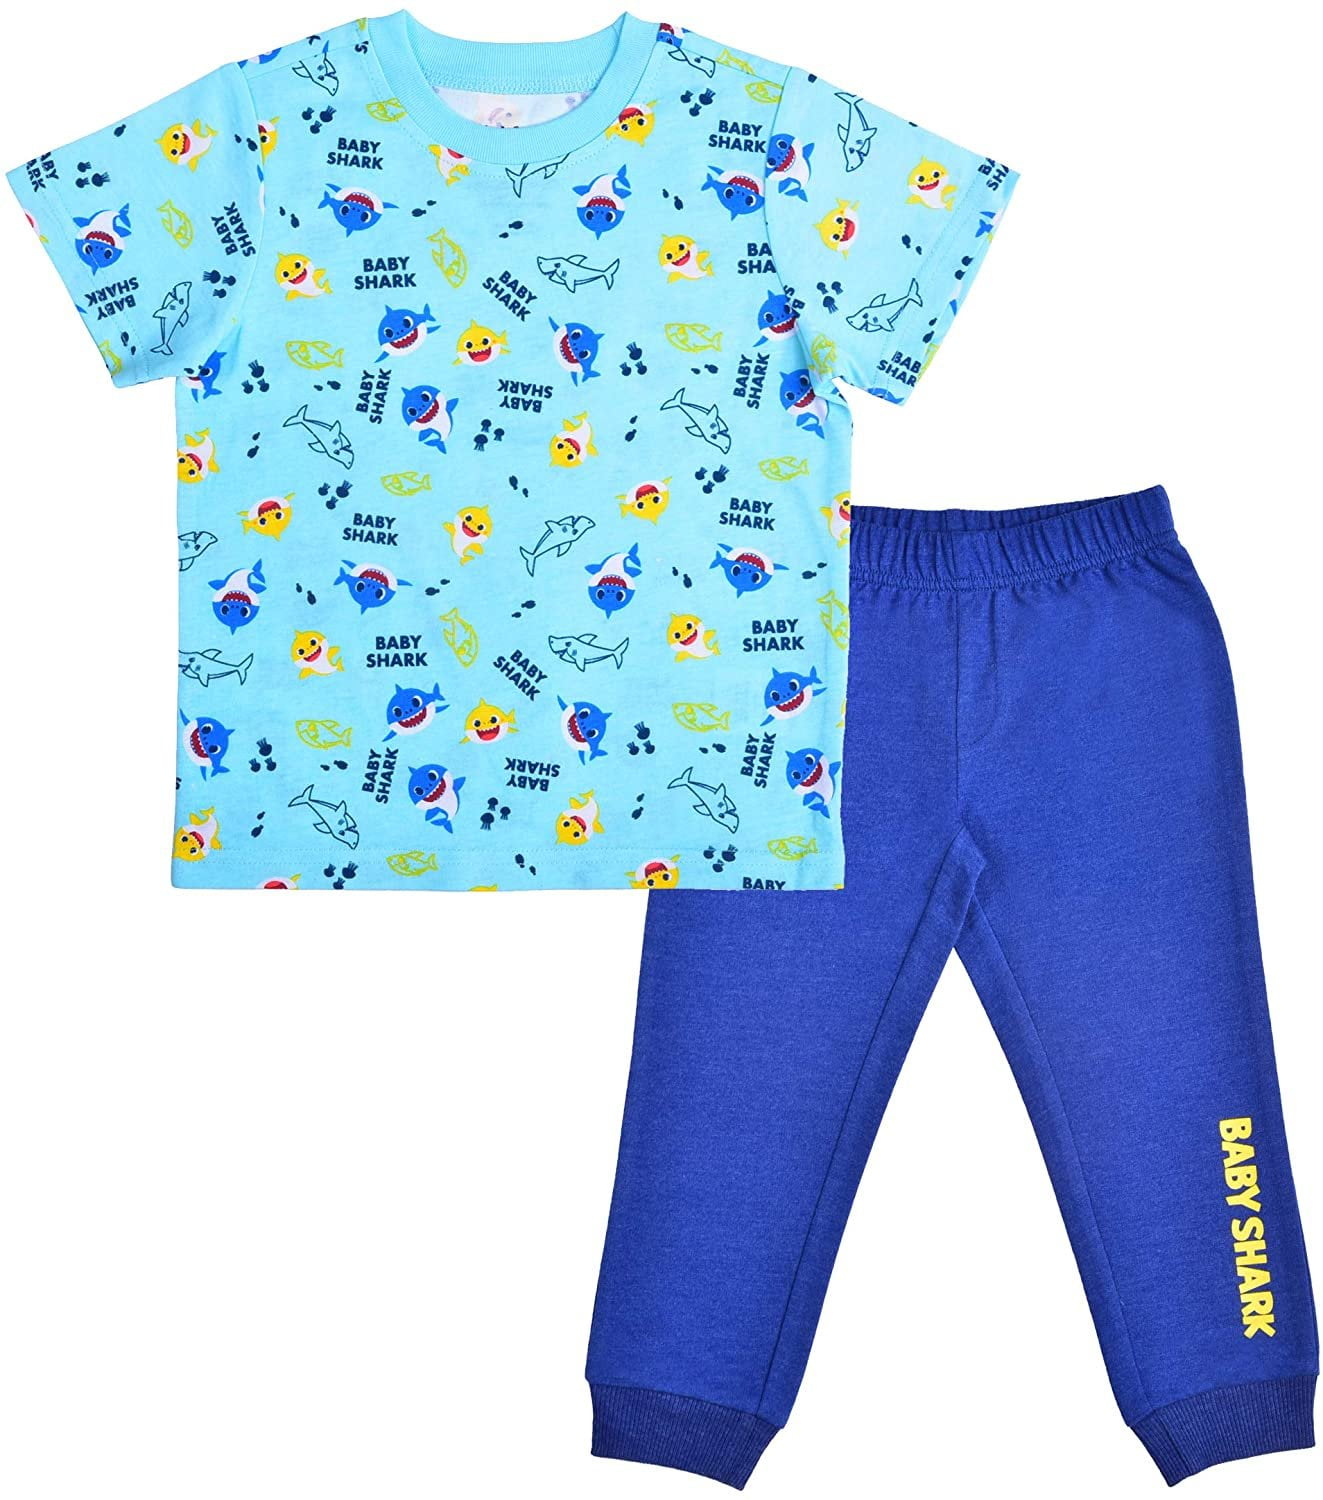 Baby Shark Boys' 3-Pack Training Pants & Chart Set - blue/multi, 4t  (Toddler)